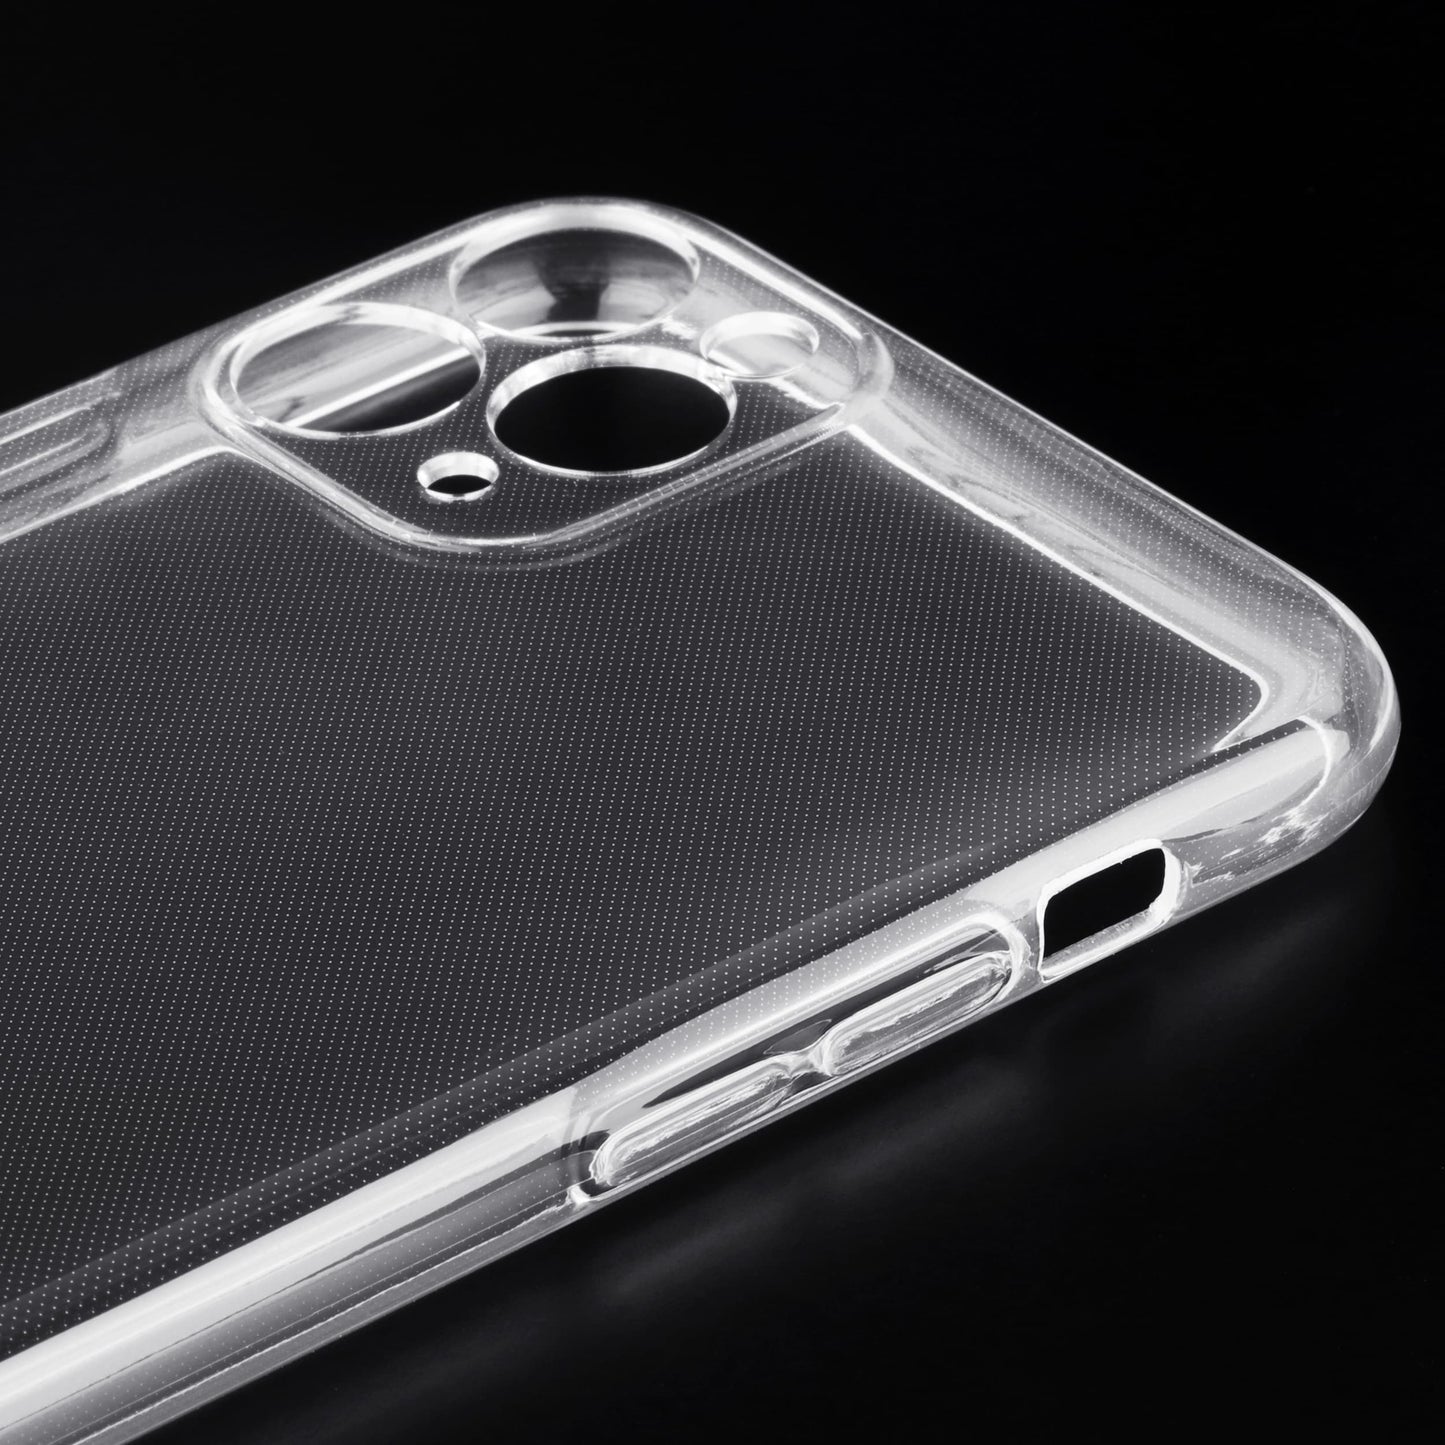 iPhone 11 Pro - Slim Case Advanced